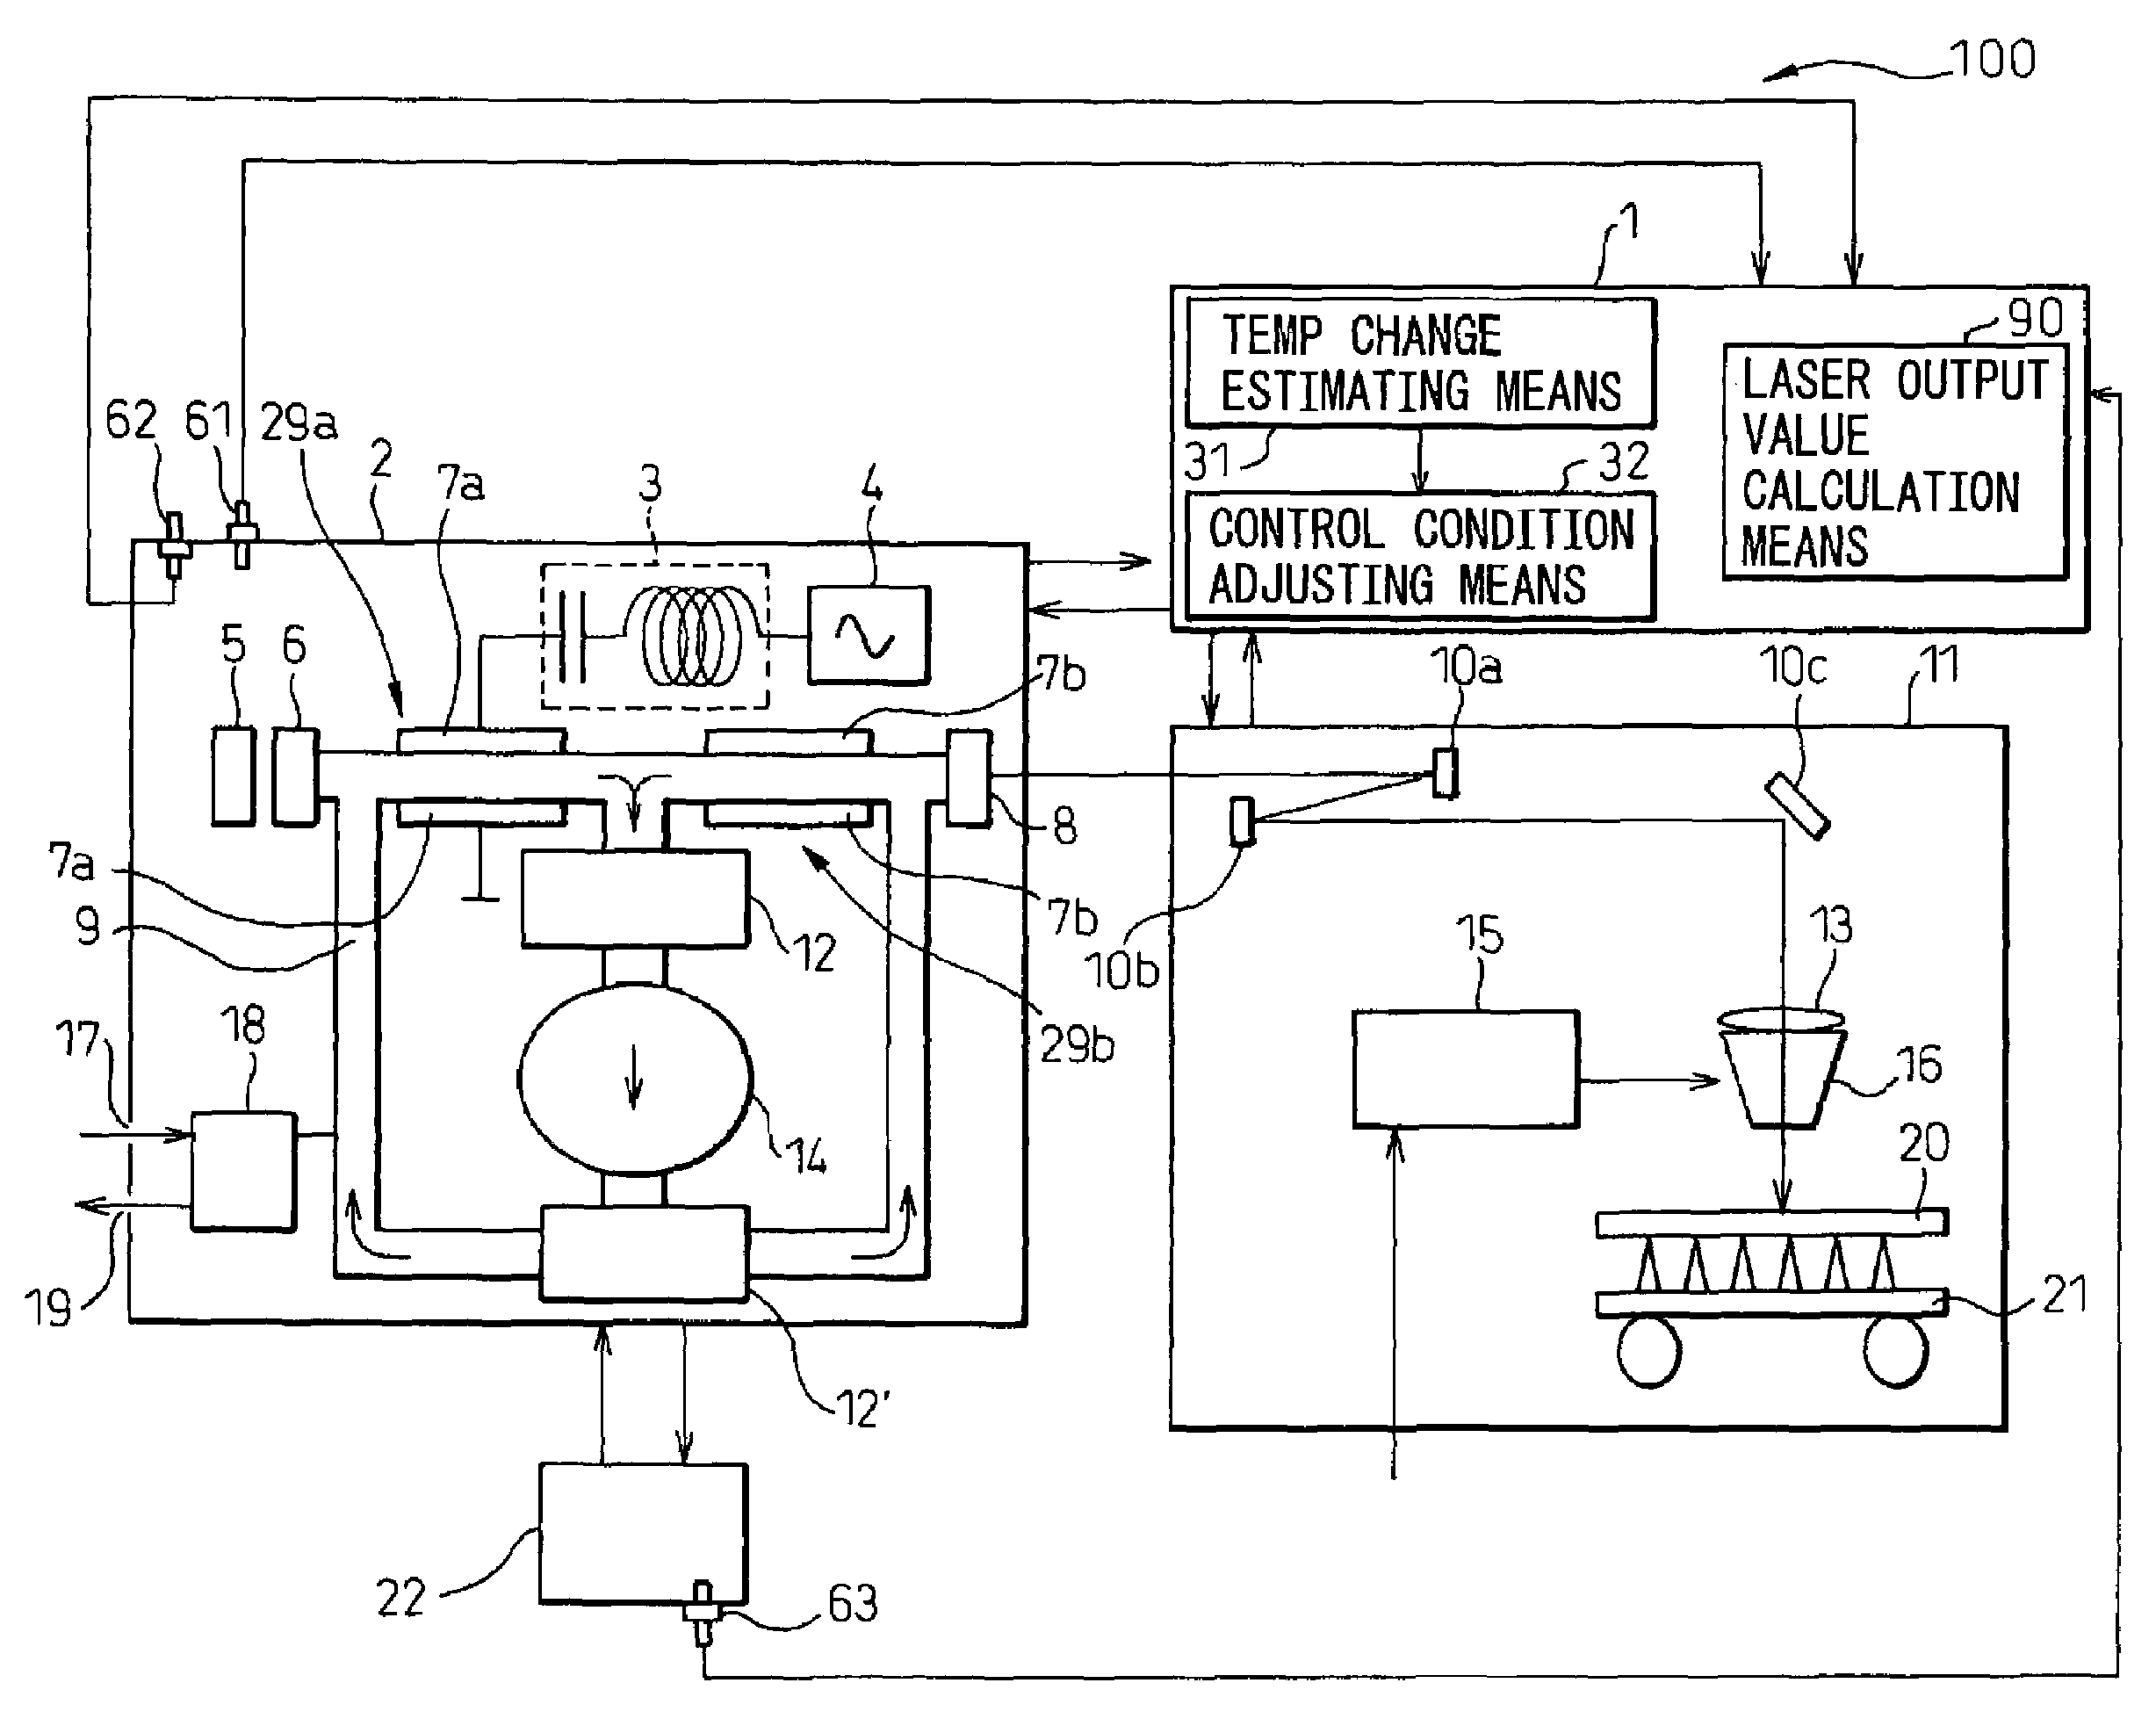 Laser apparatus